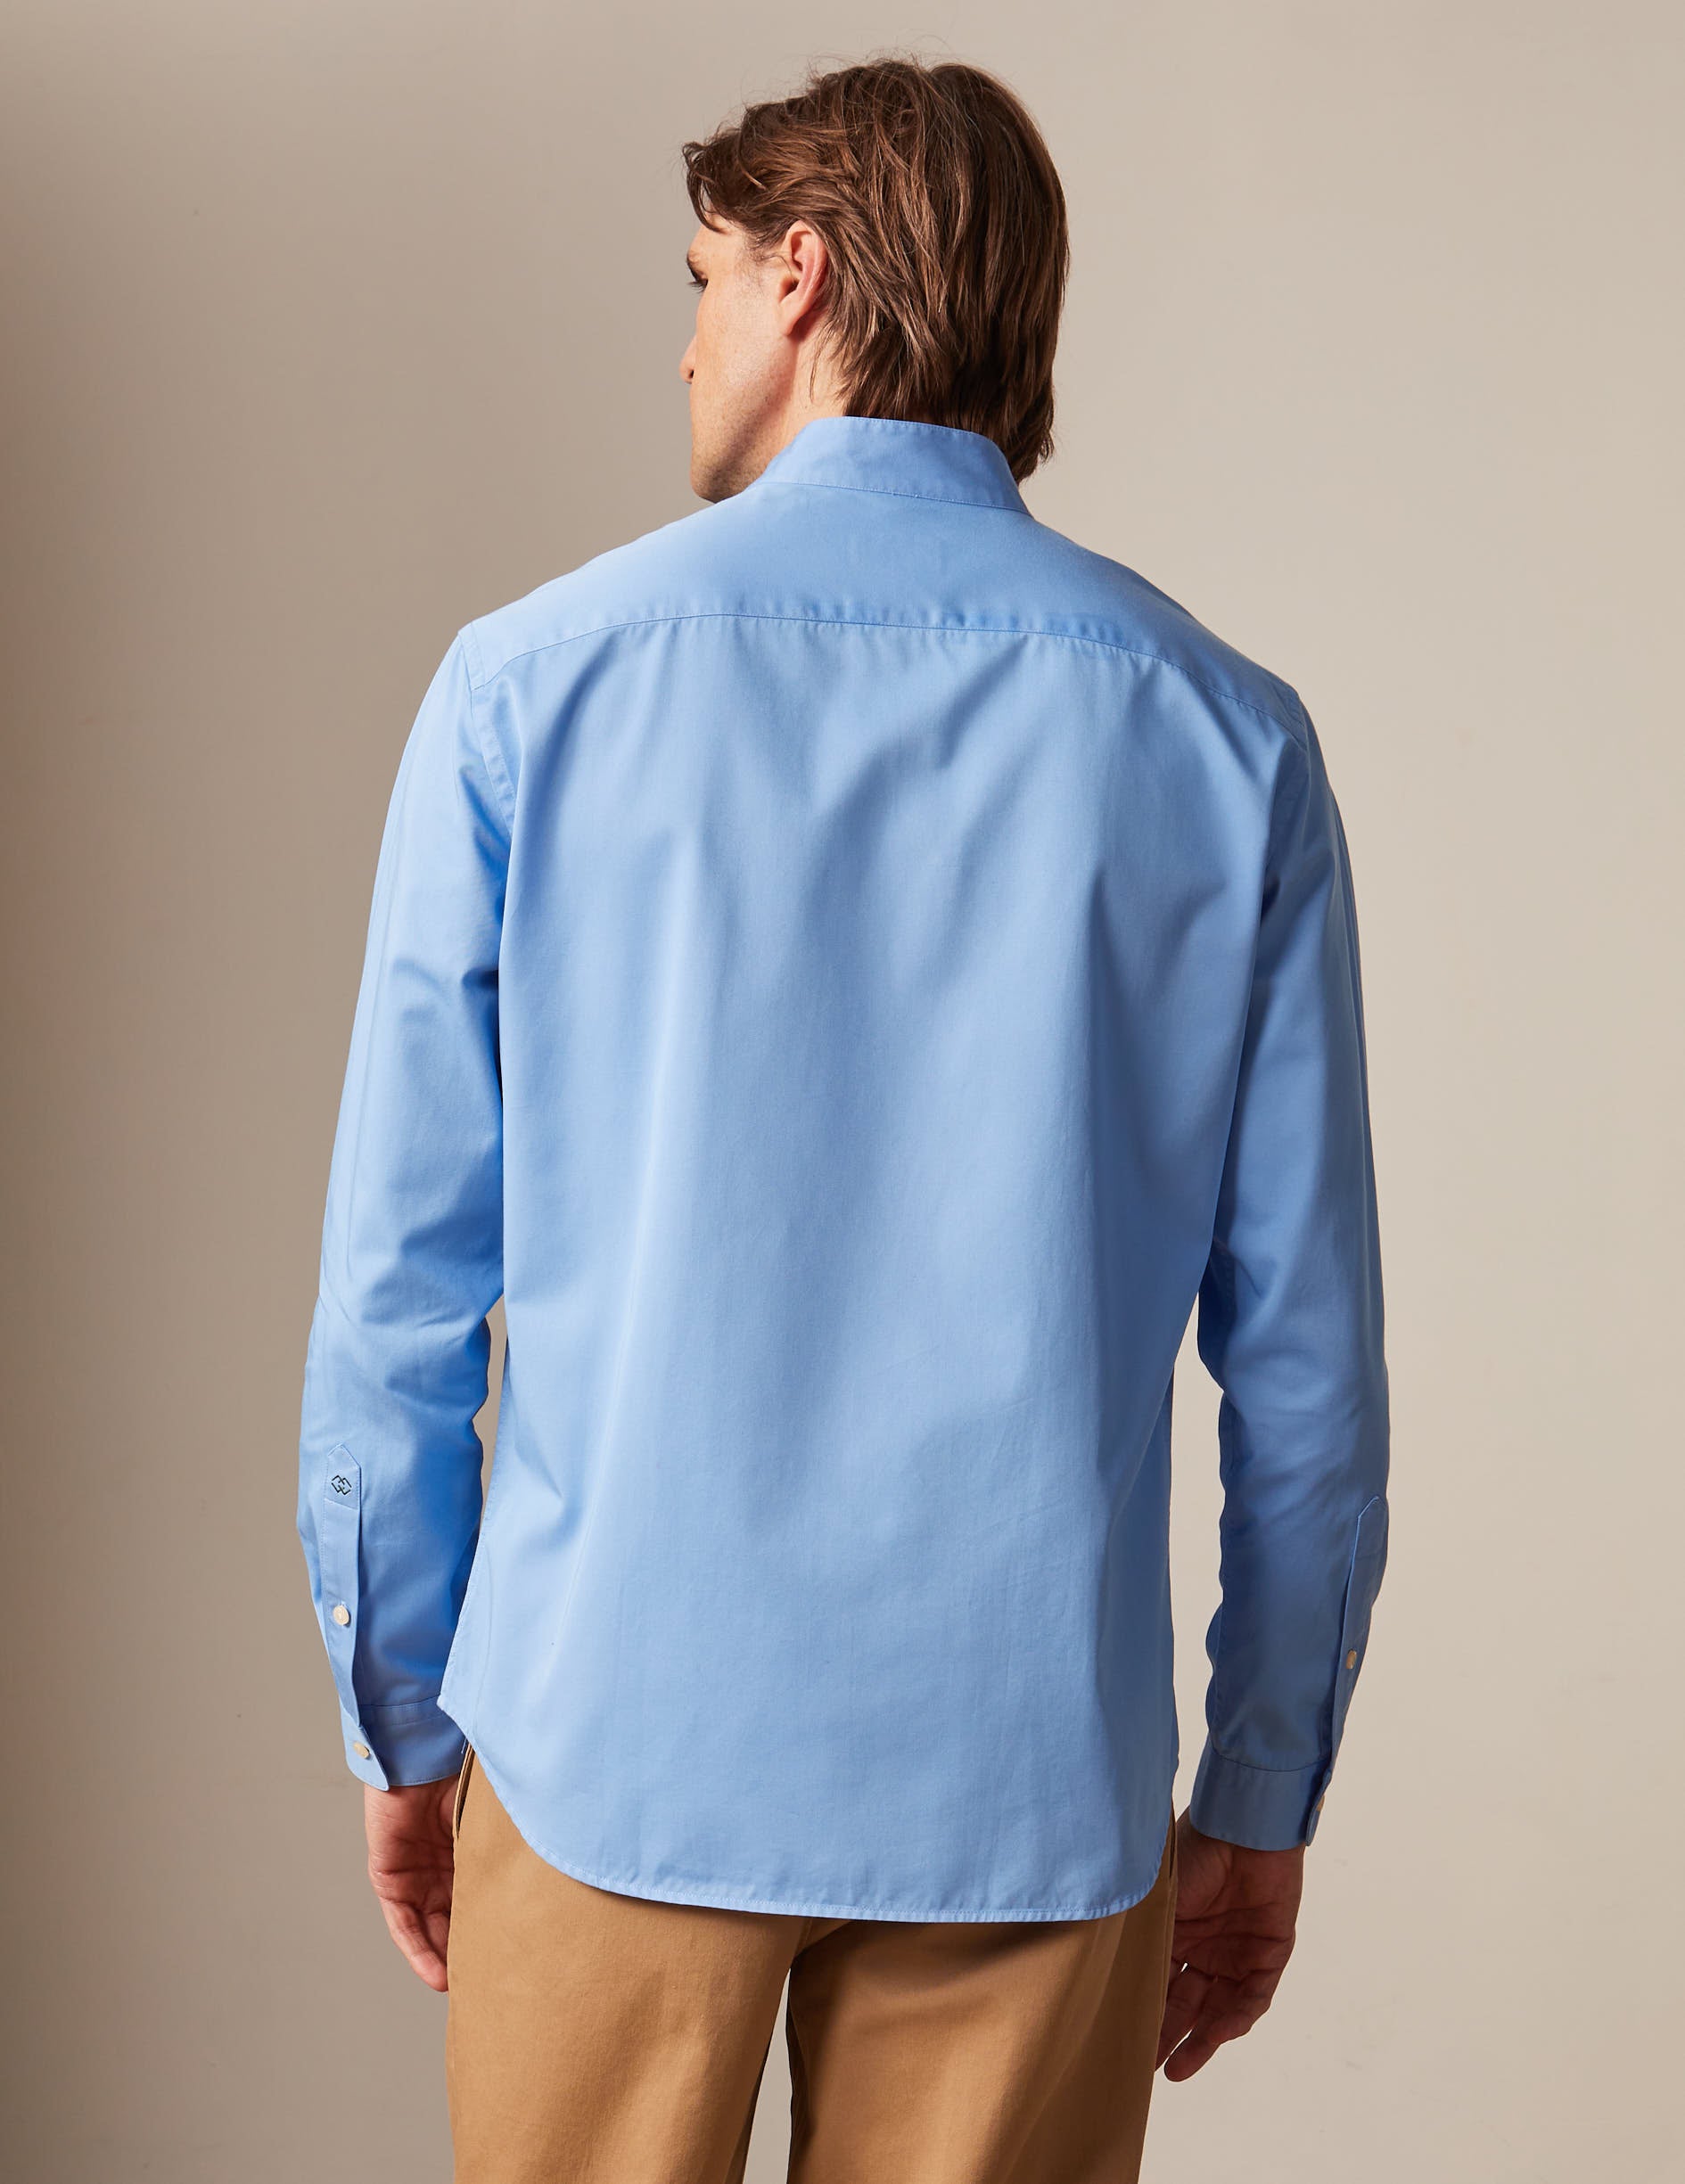 Blue Carl shirt - Twill - Open straight Collar